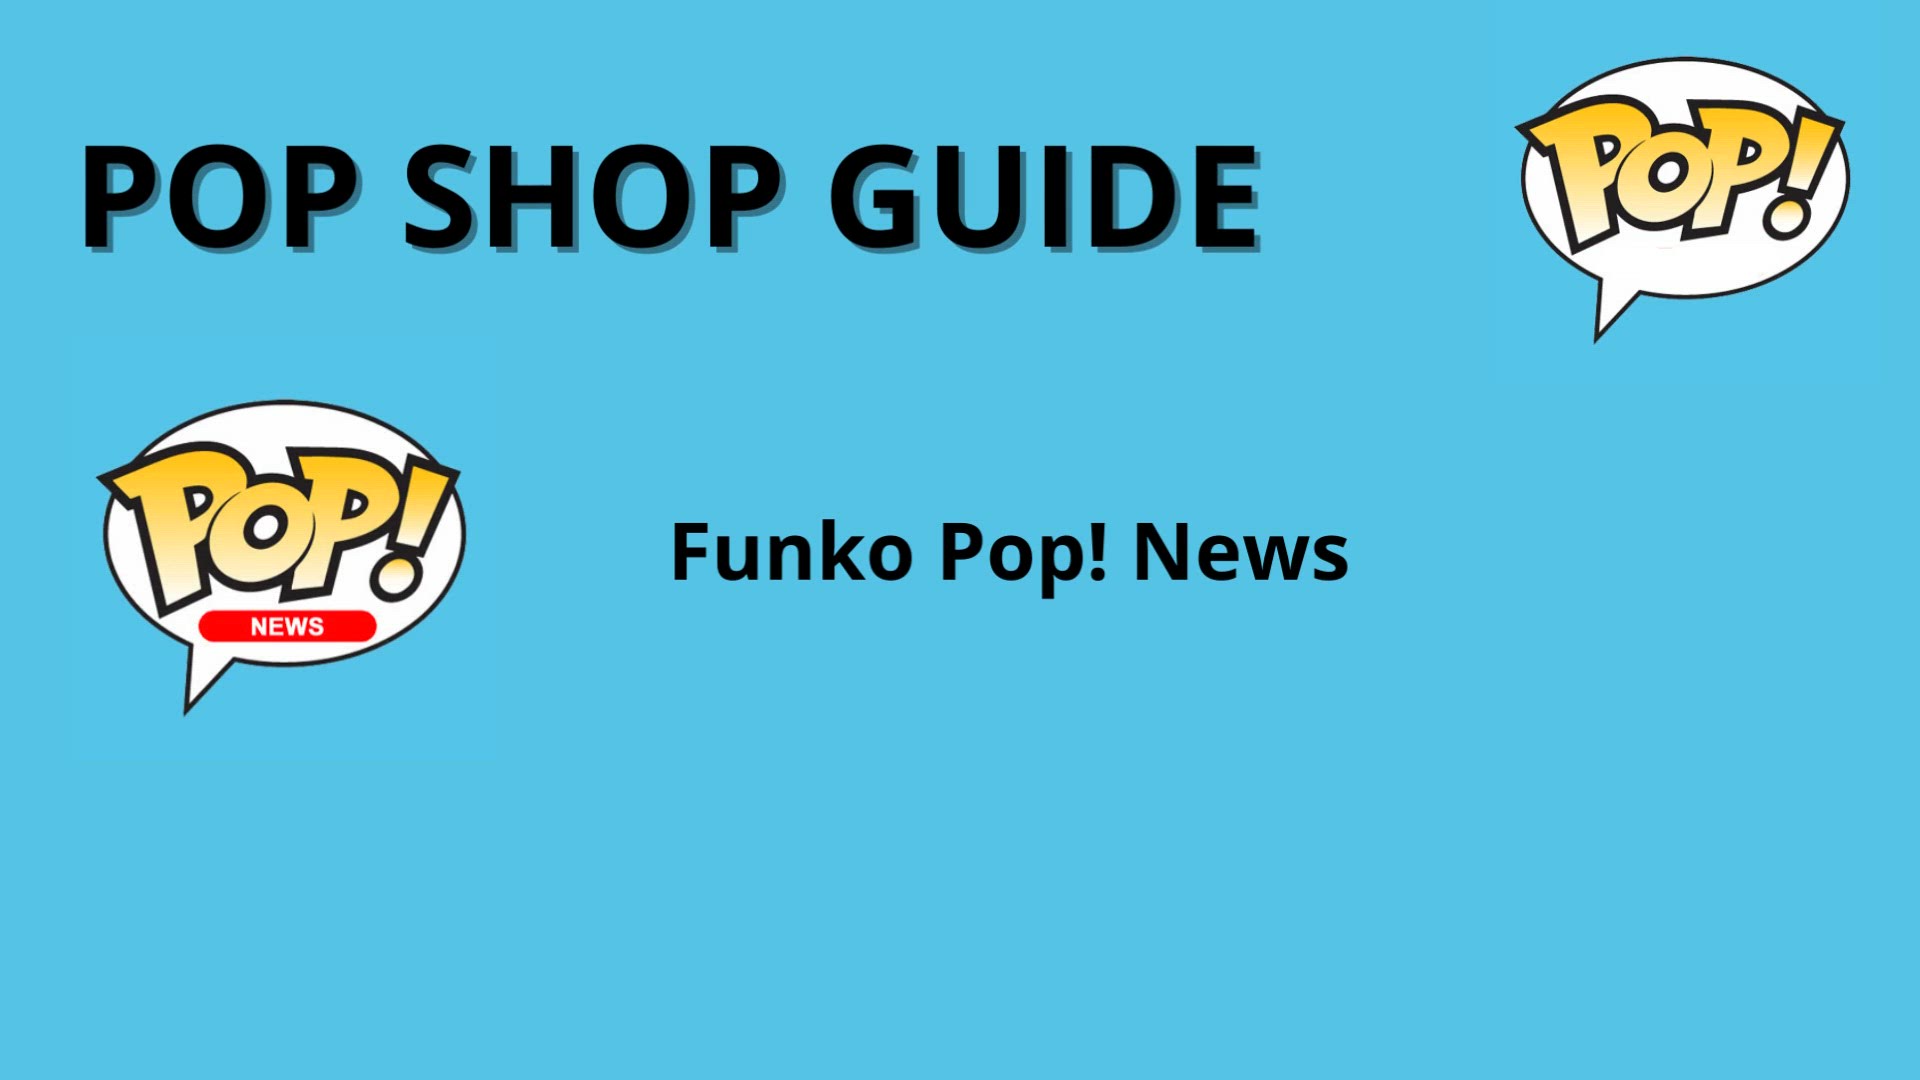 Funko Pop NHL Mascots Checklist, Gallery, Exclusives List